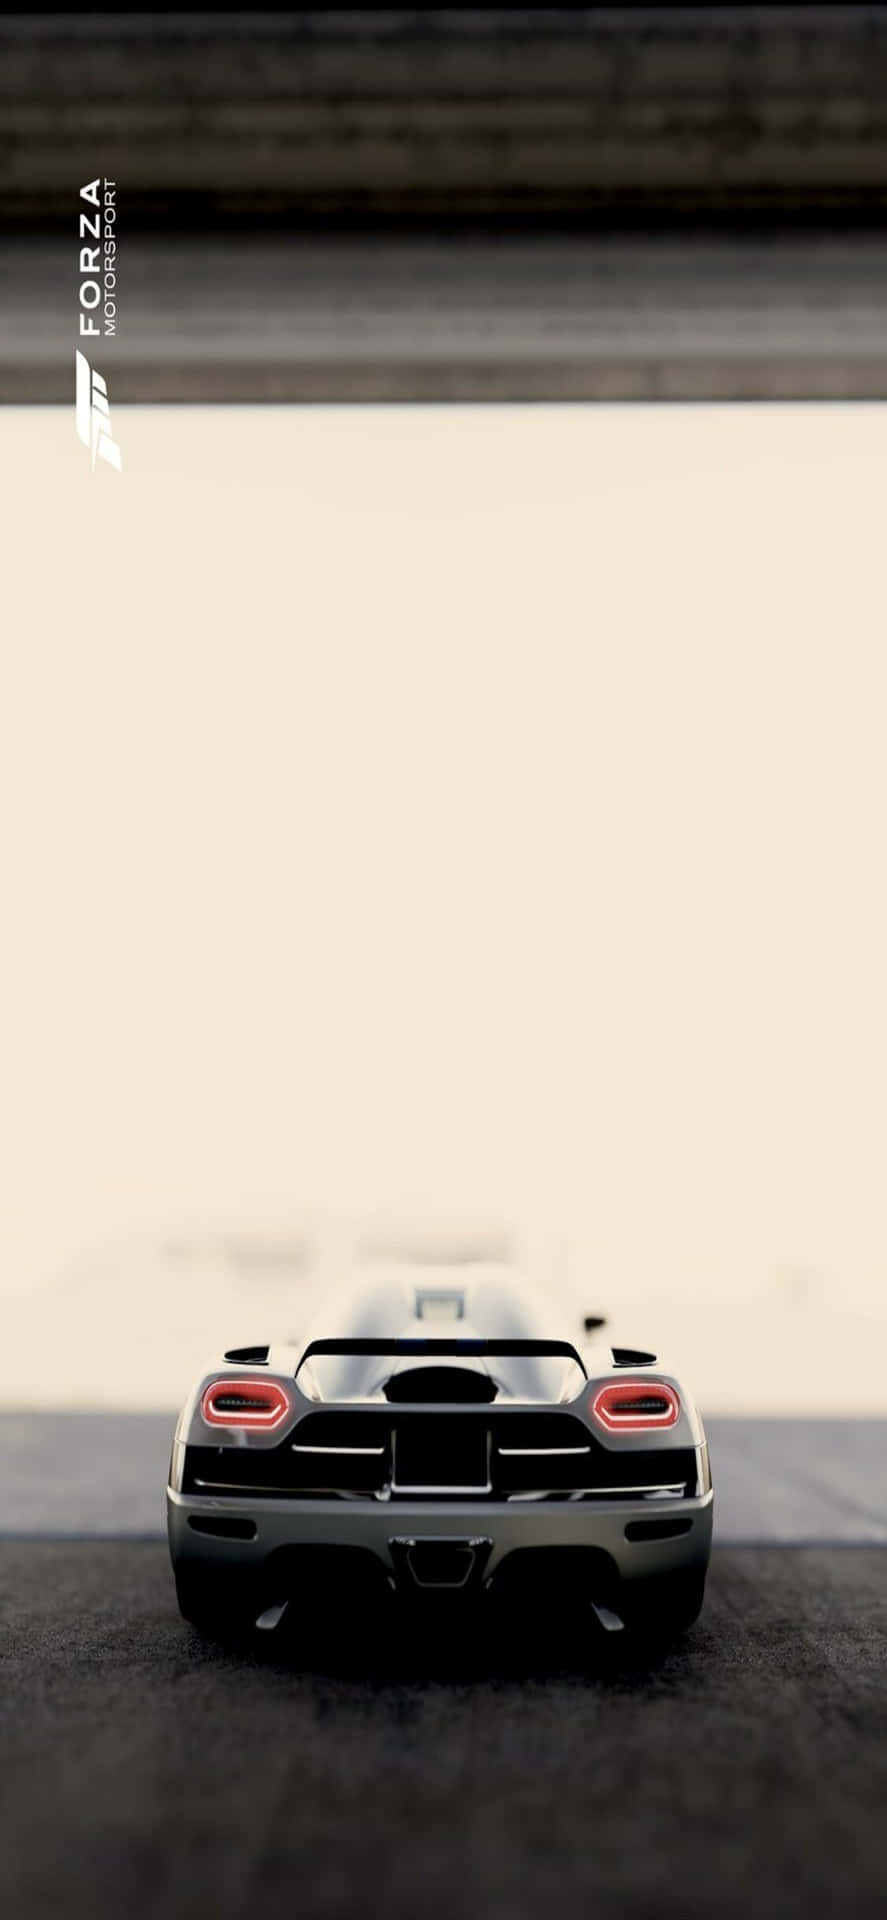 Koenigsegg One iPhone X Forza Motorsport 7 Background